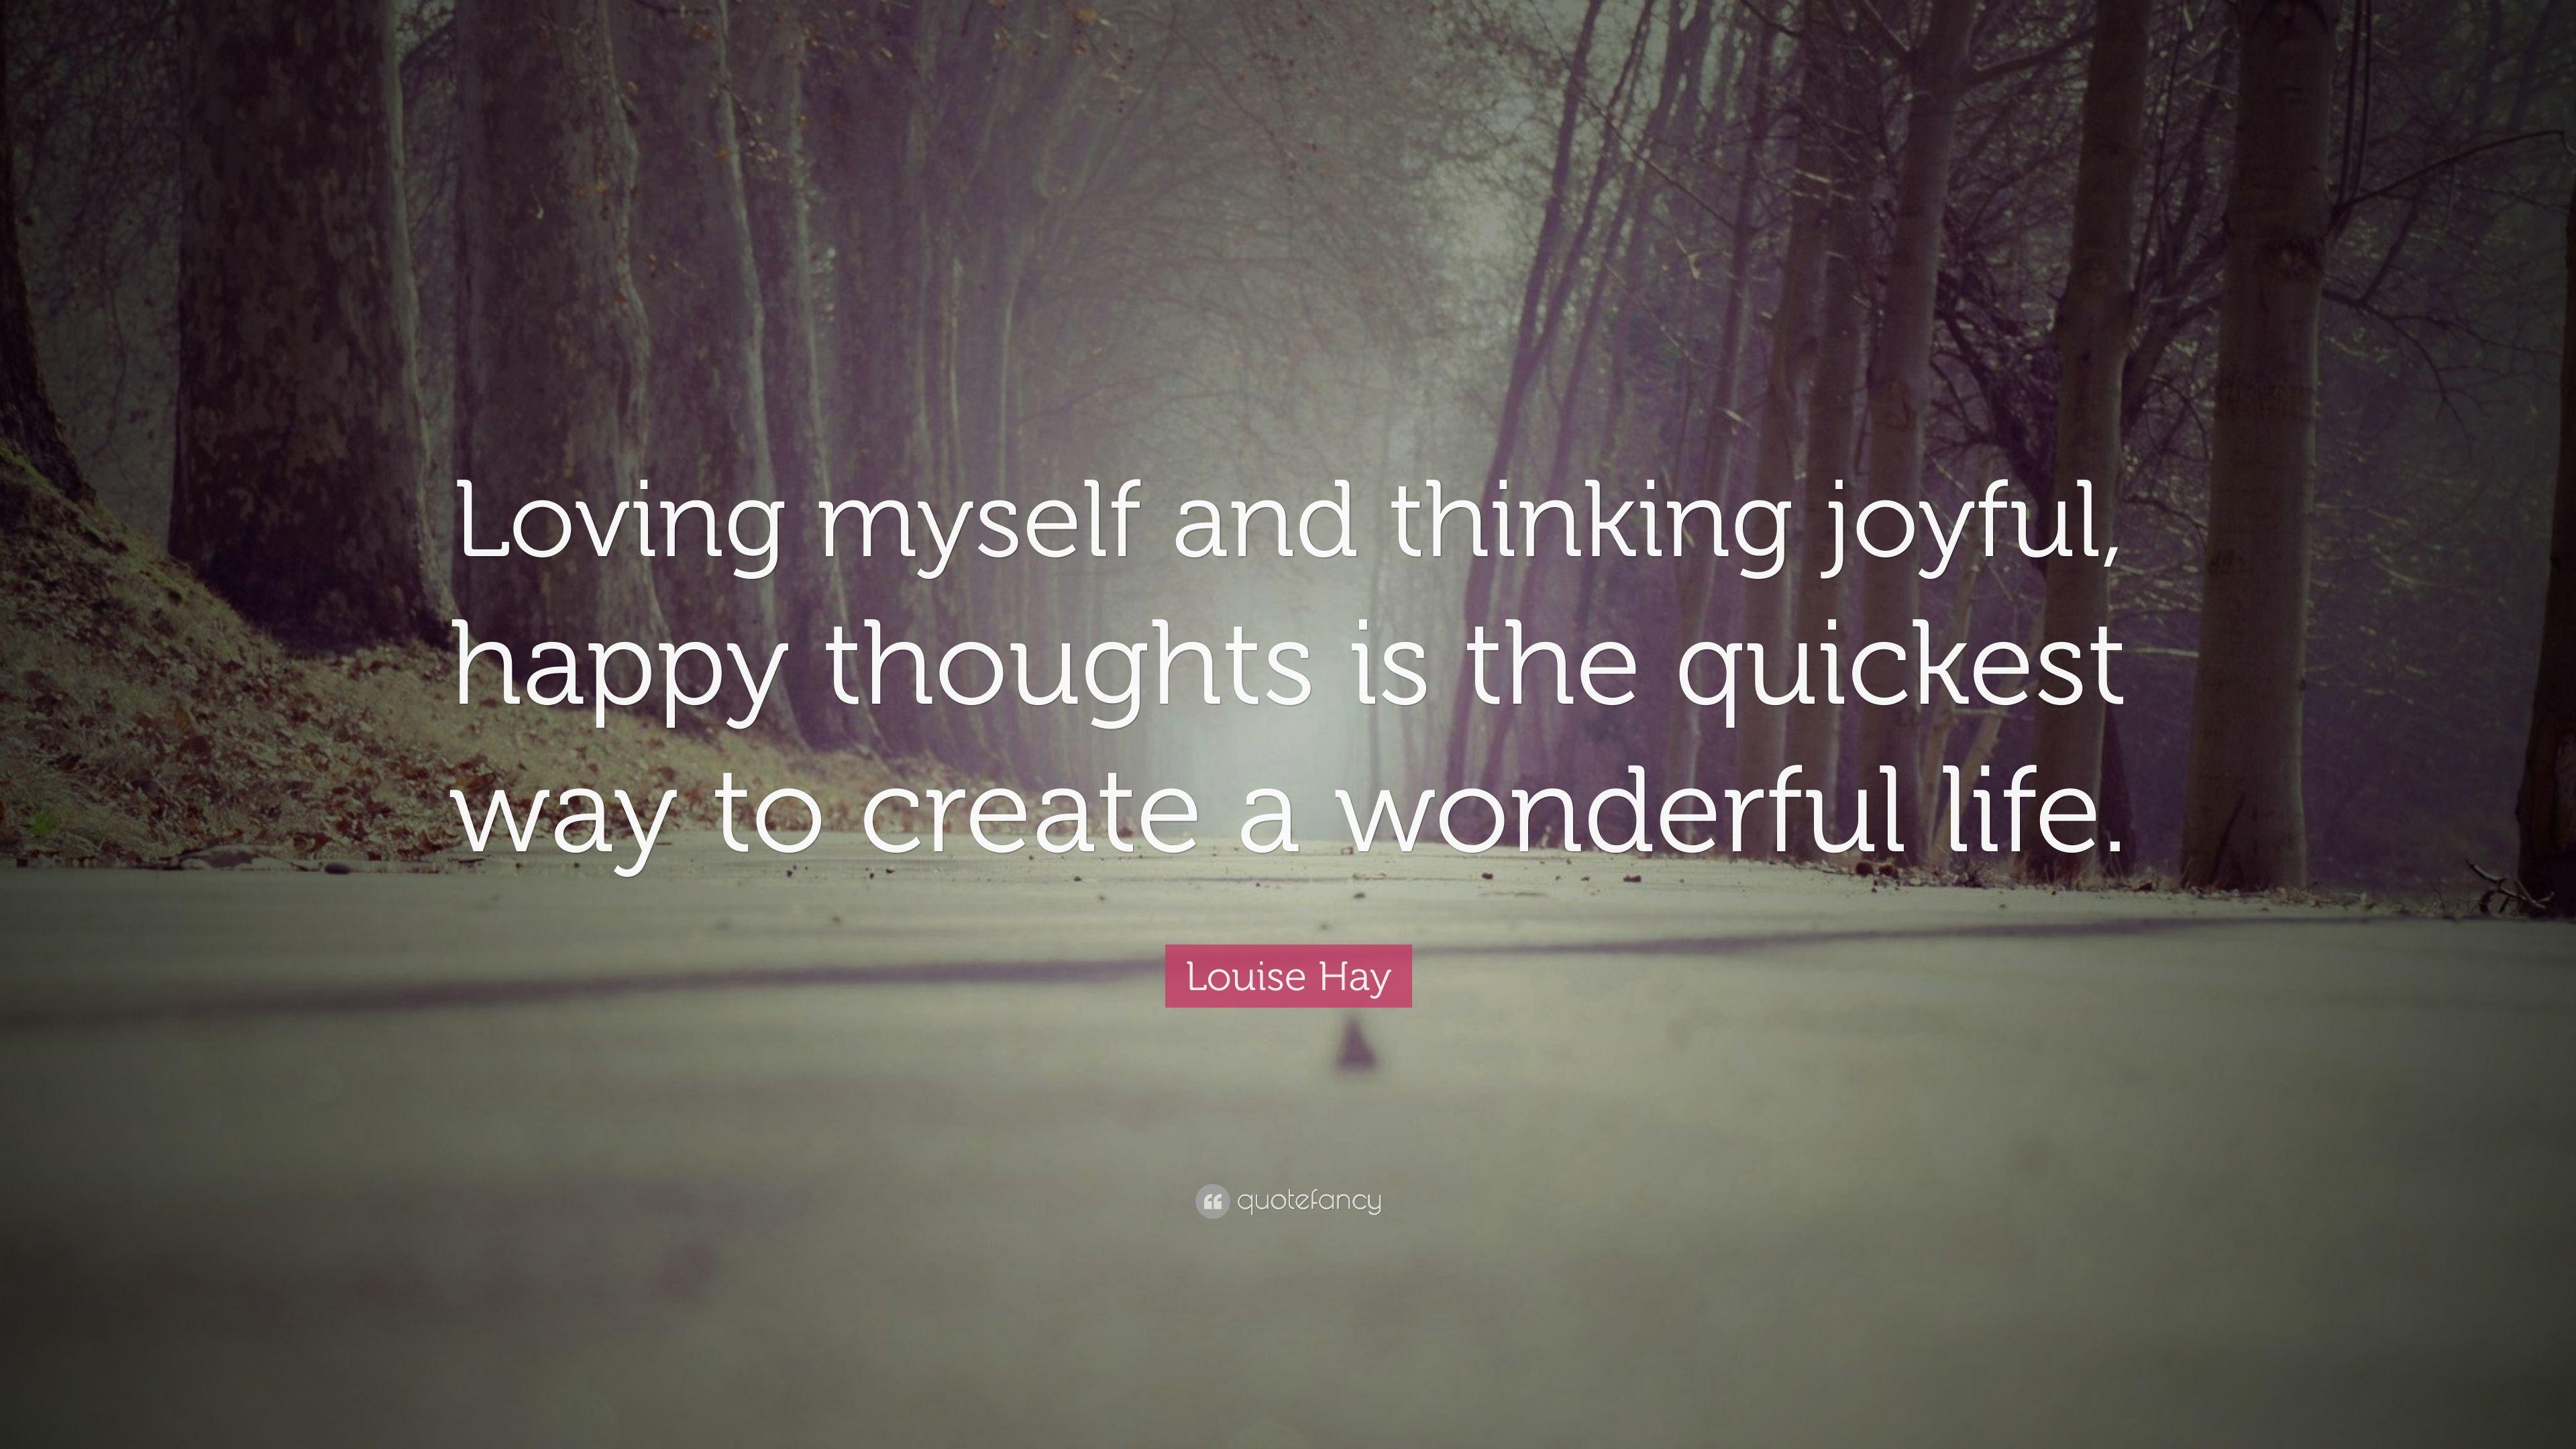 Louise Hay Quote: “Loving myself and thinking joyful, happy